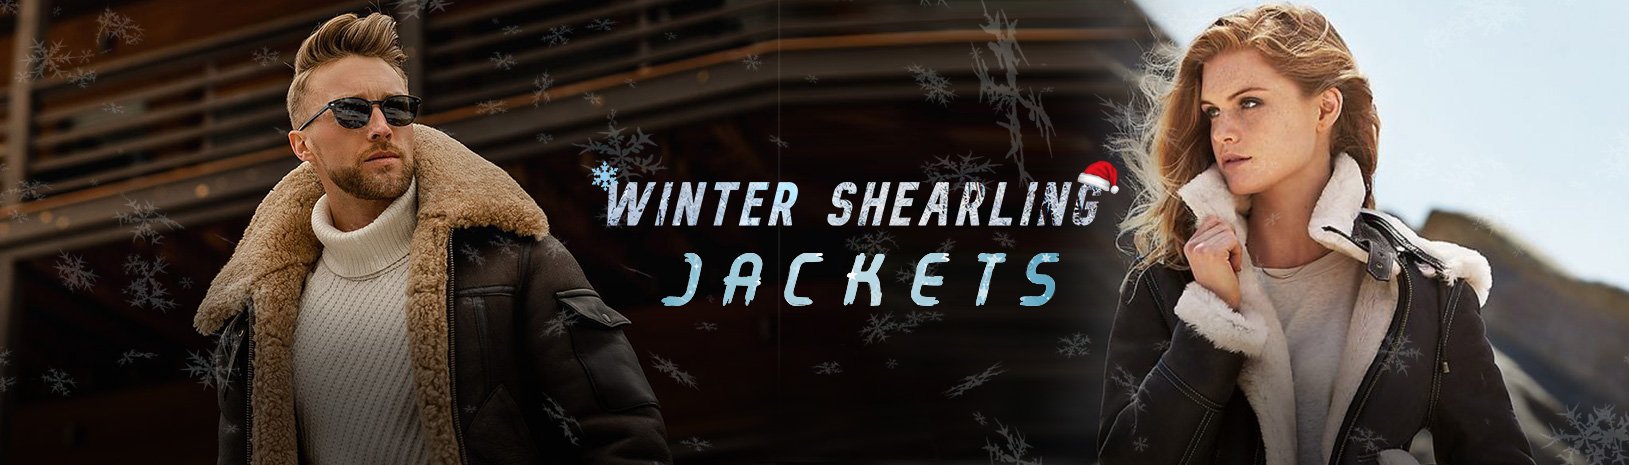 Winter Shearling Jackets